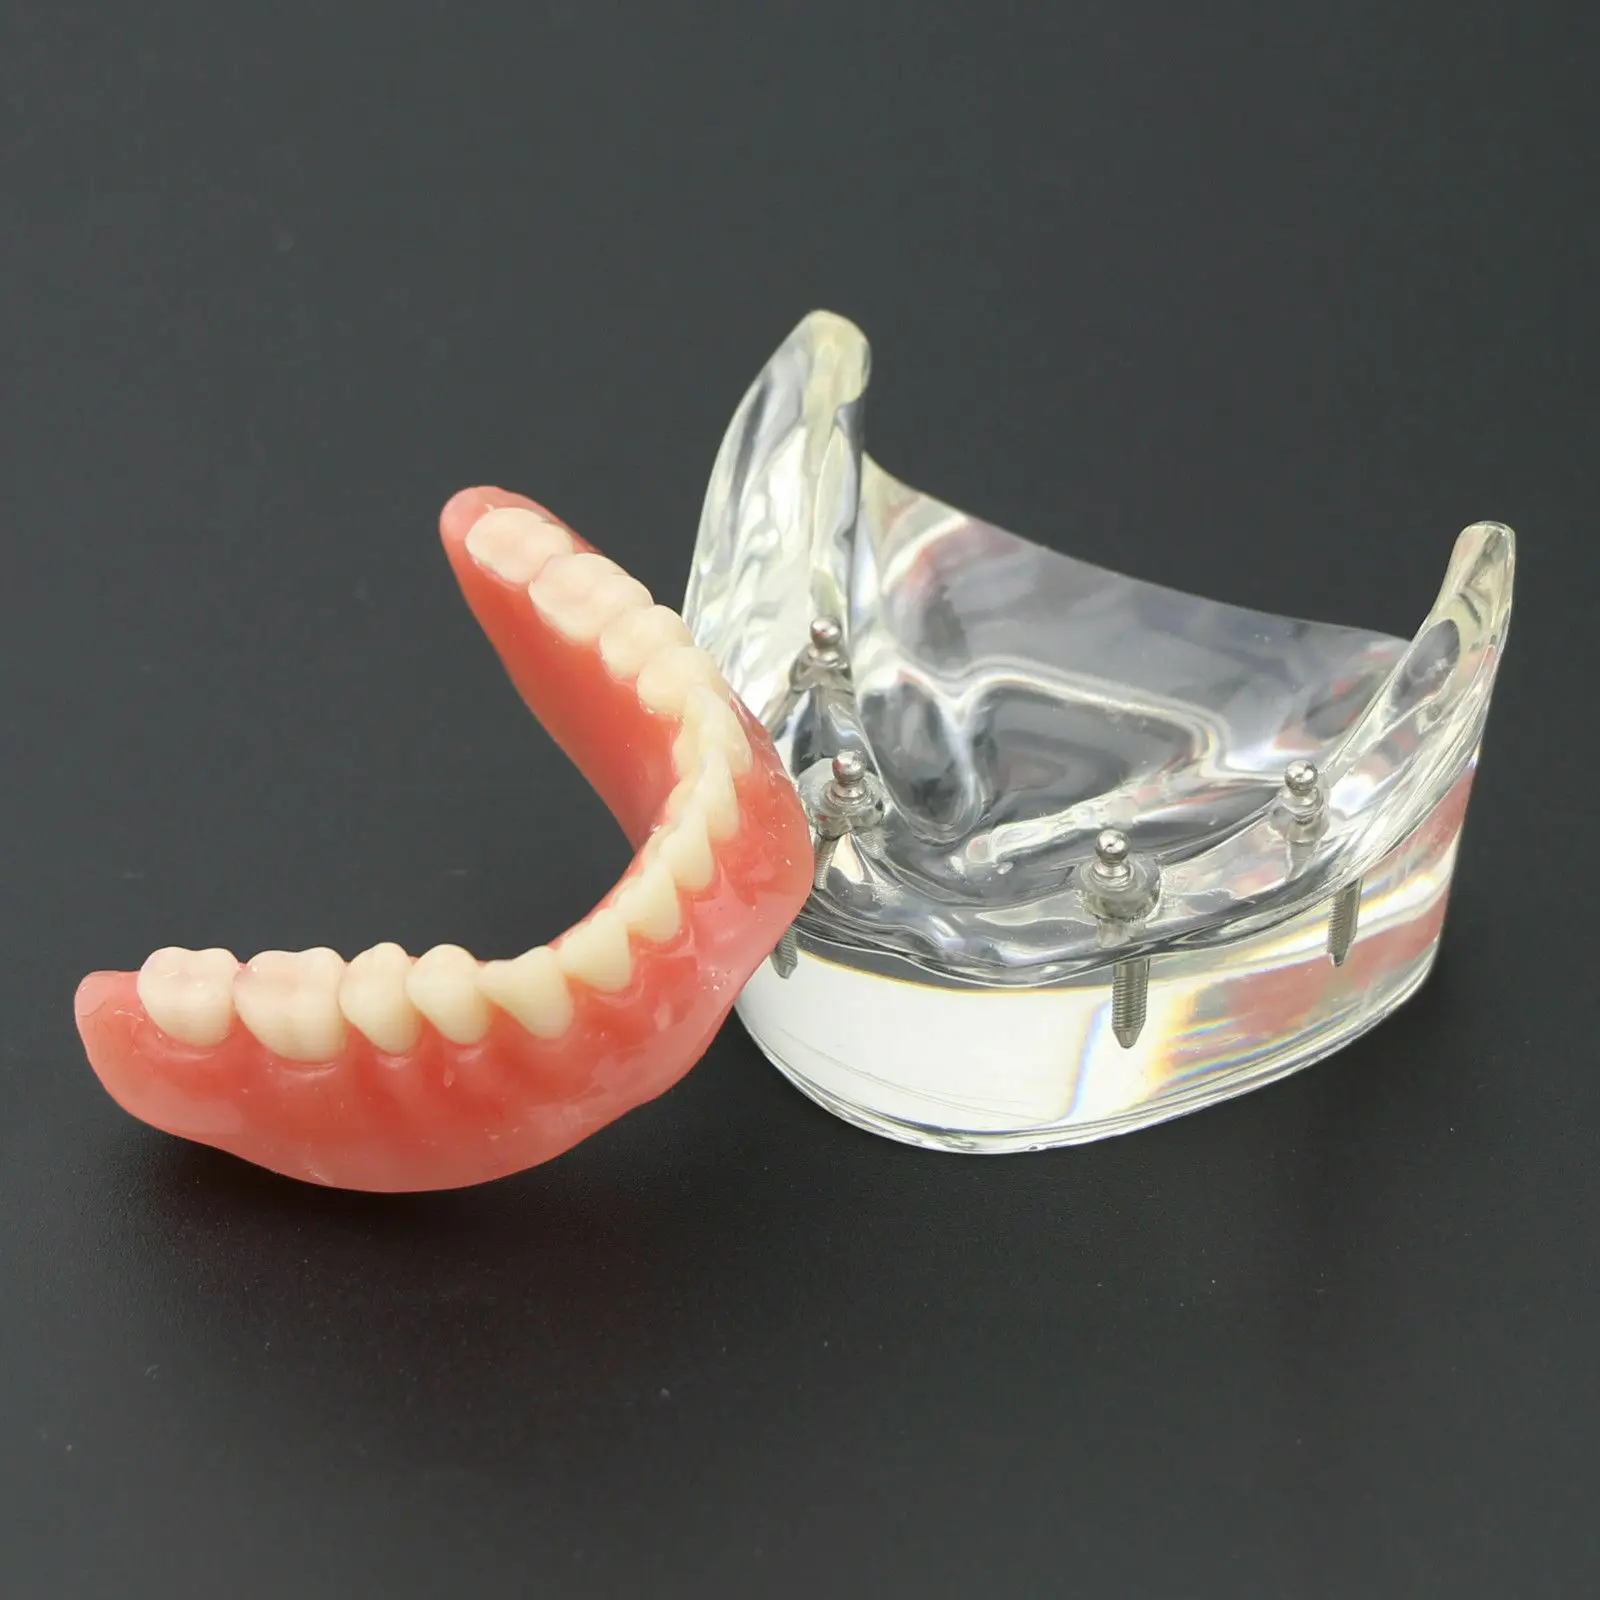 Dental Teeth Study Model Overdenture Inferior 4 Implant Demo Model 1PC